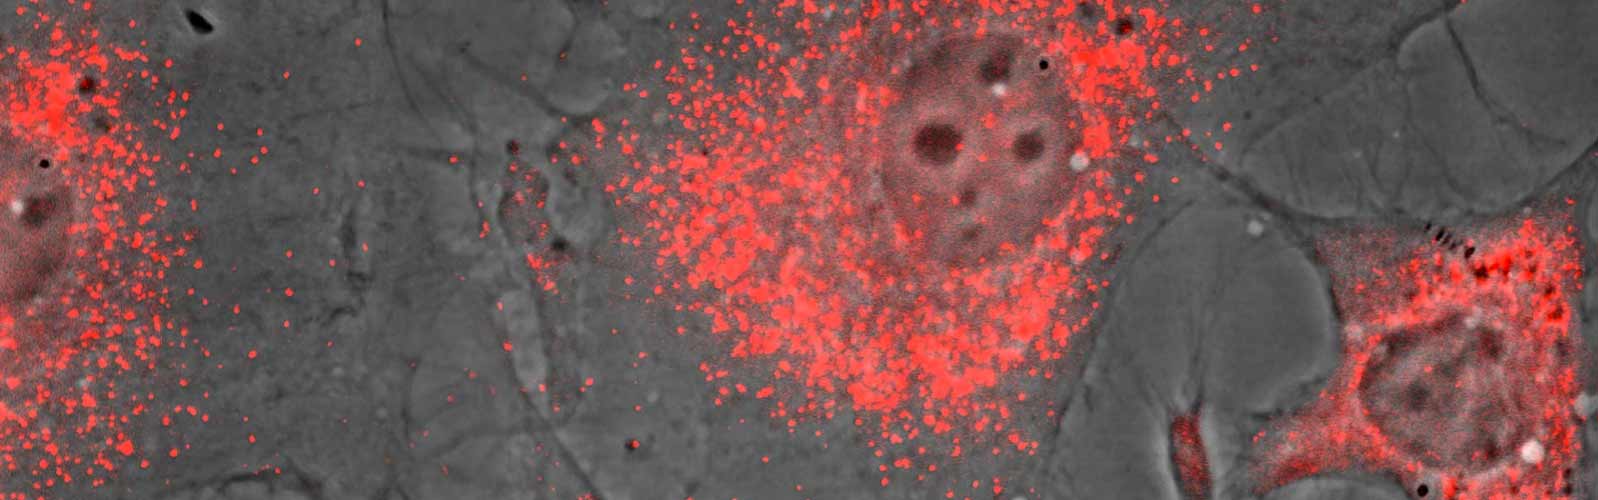 anova institute for regenerative medicine - the power of exosomes